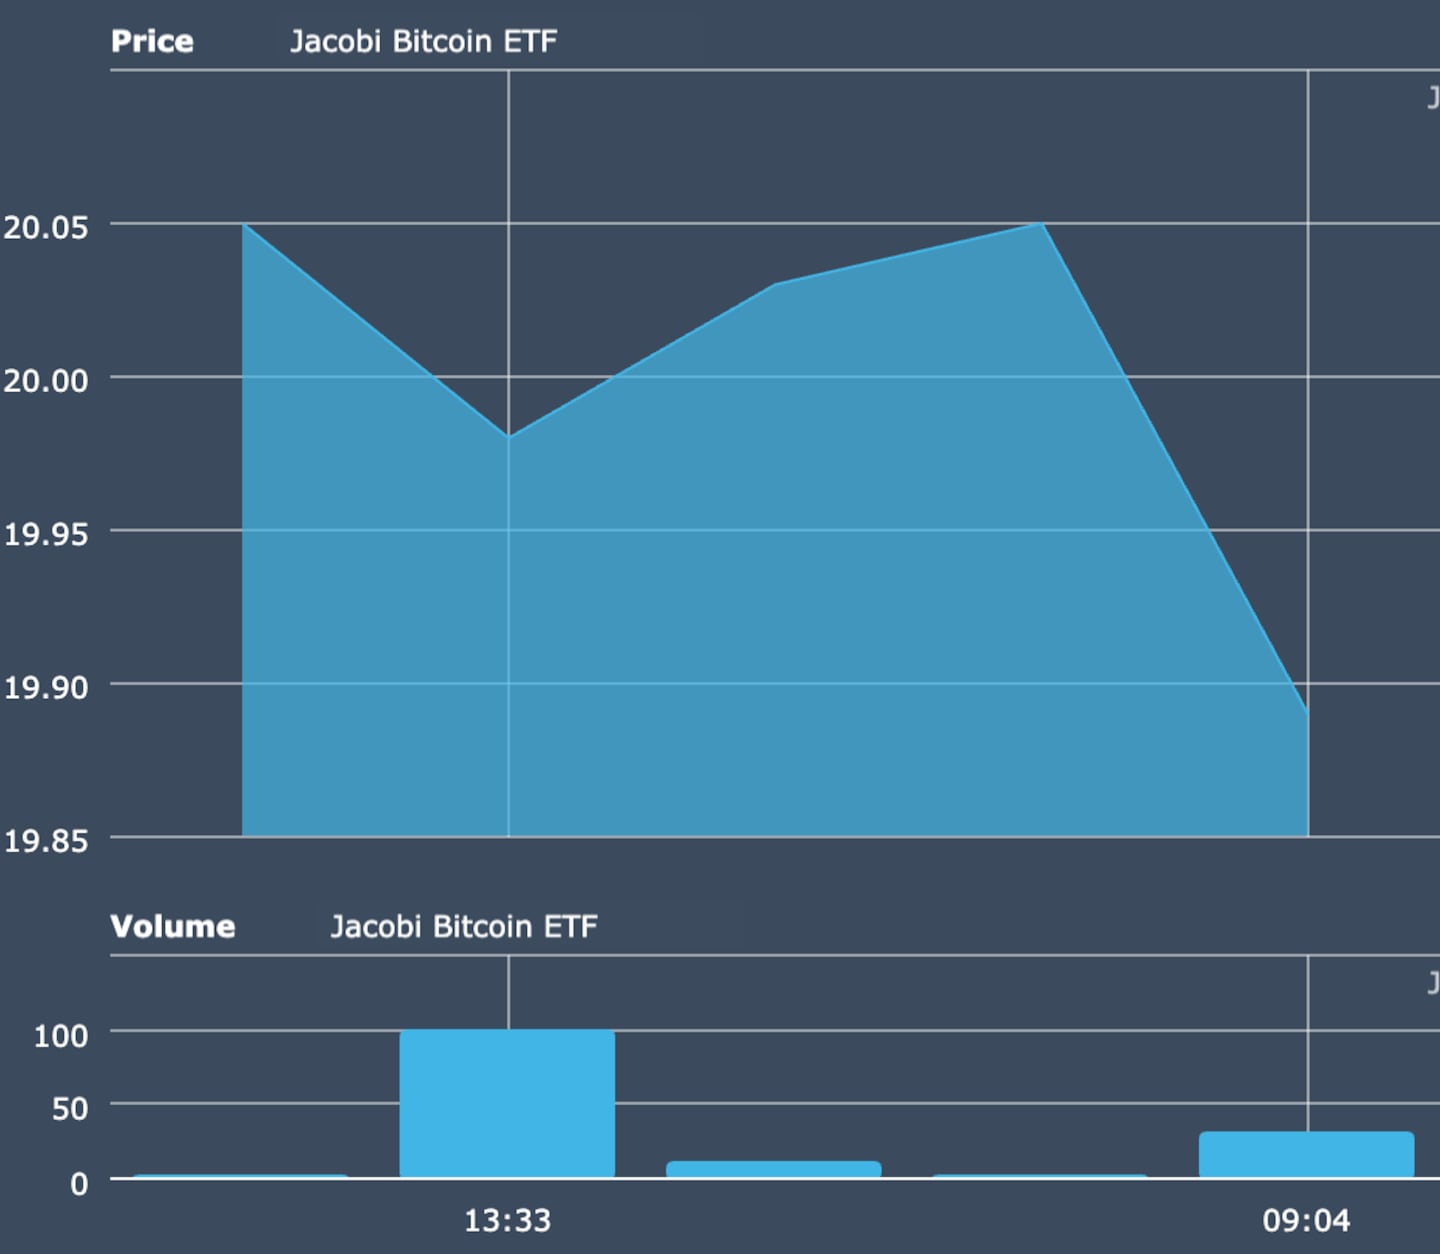 Jacobi Bitcoin ETF volume and price action